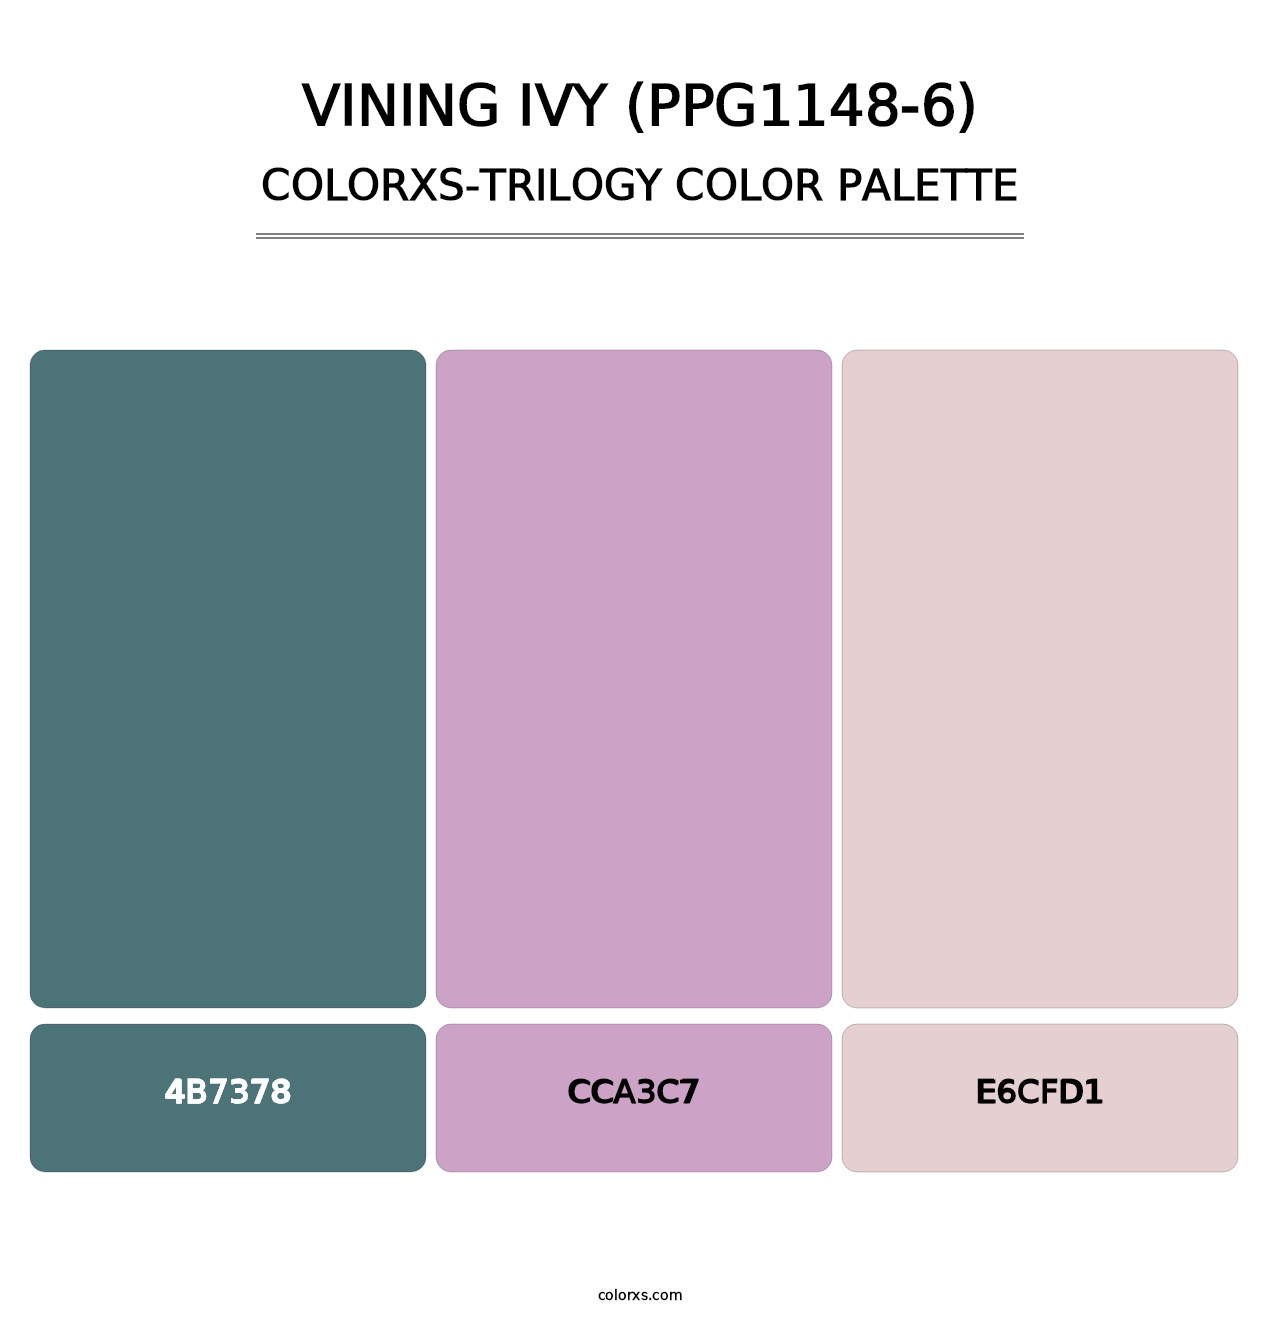 Vining Ivy (PPG1148-6) - Colorxs Trilogy Palette